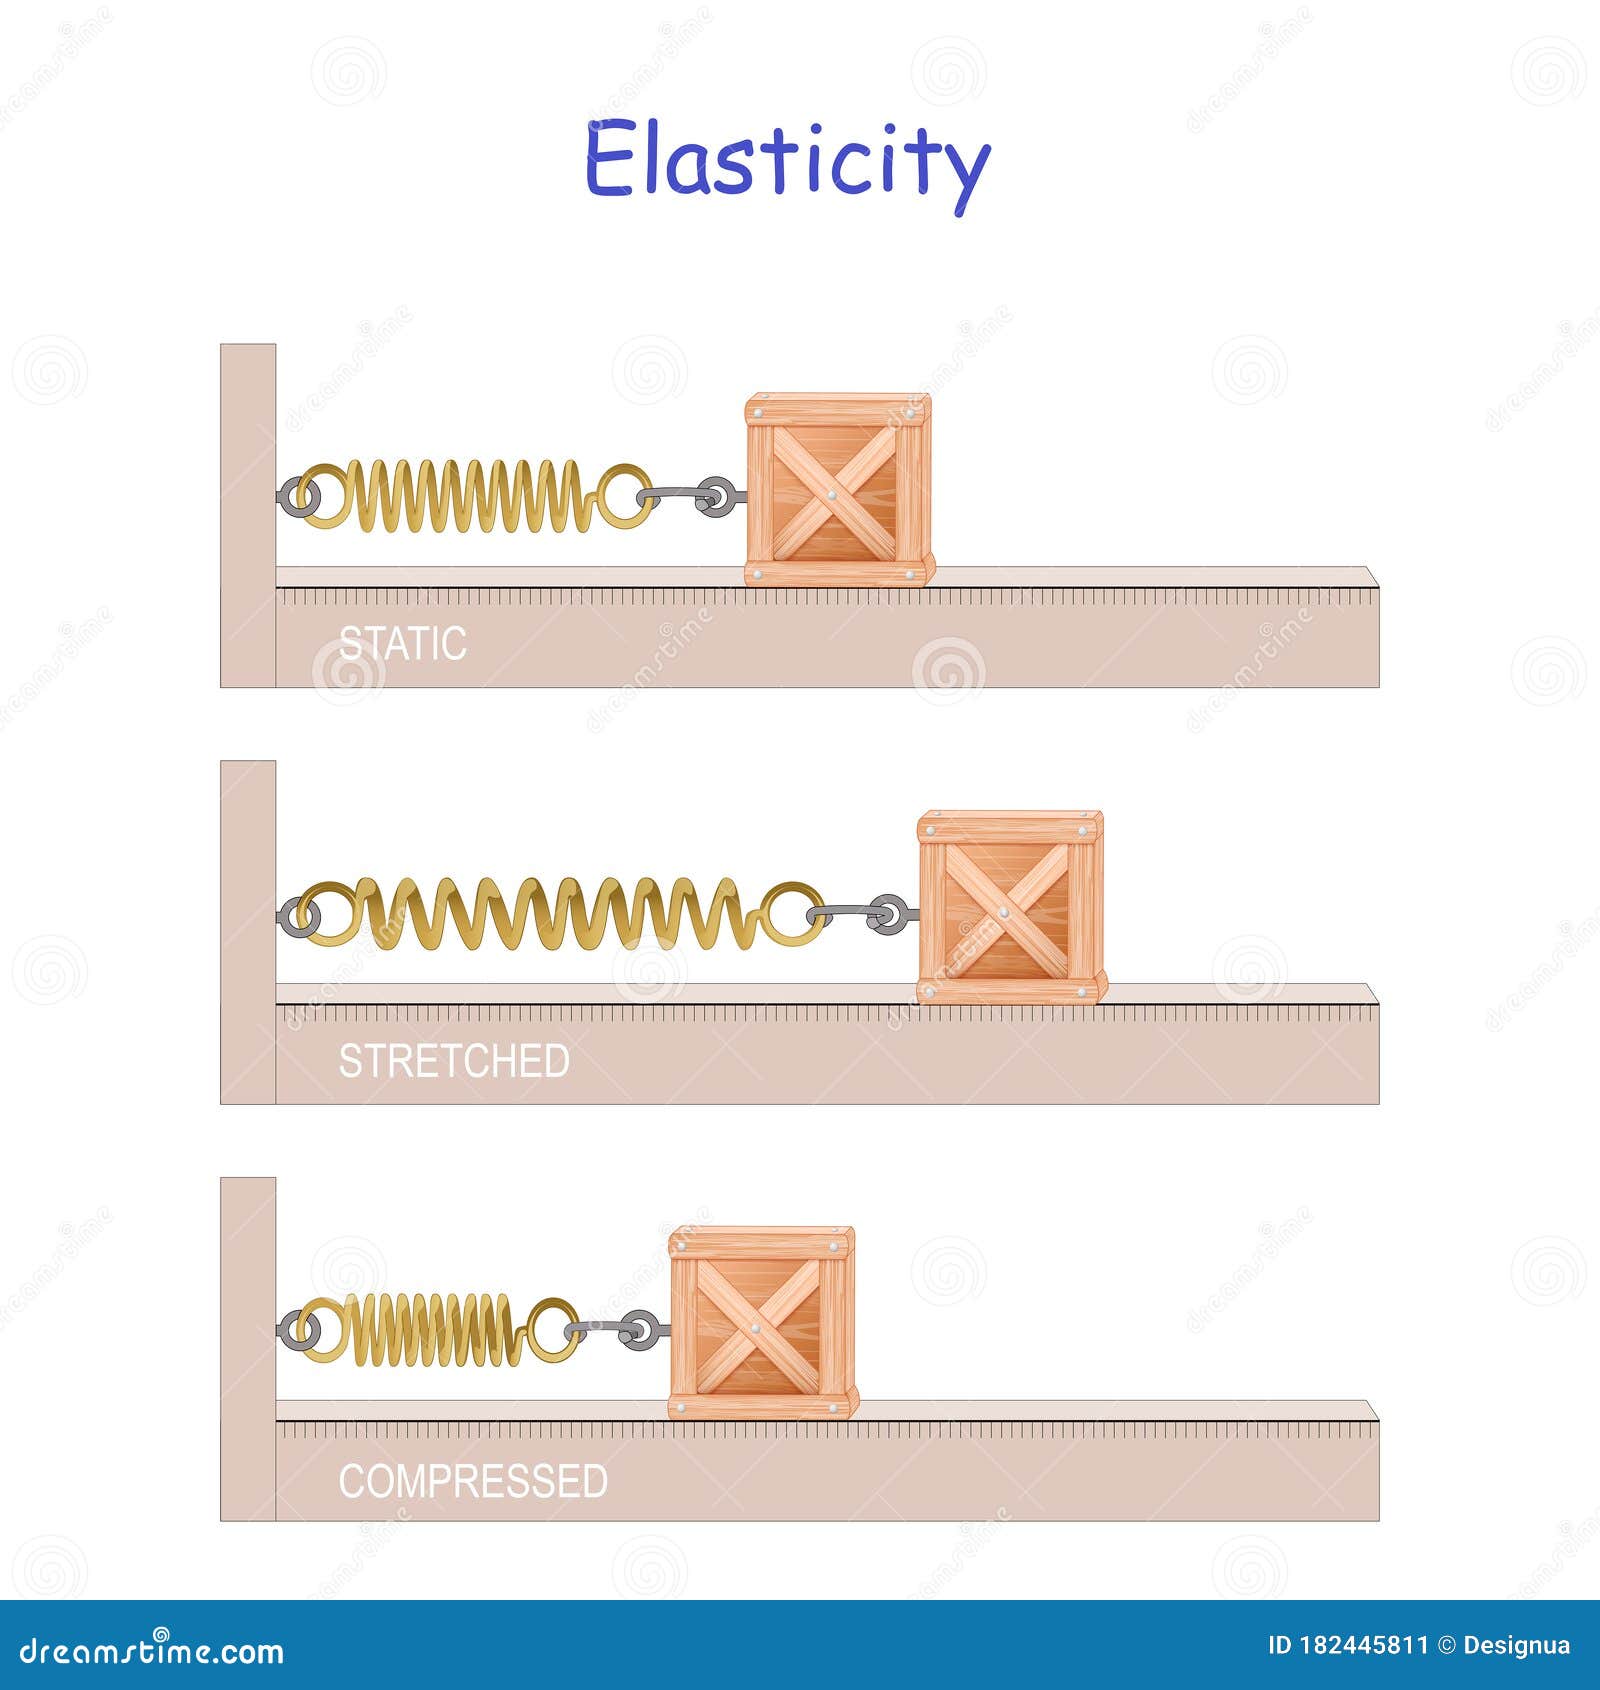 Energy elastic potential Elastic Potential